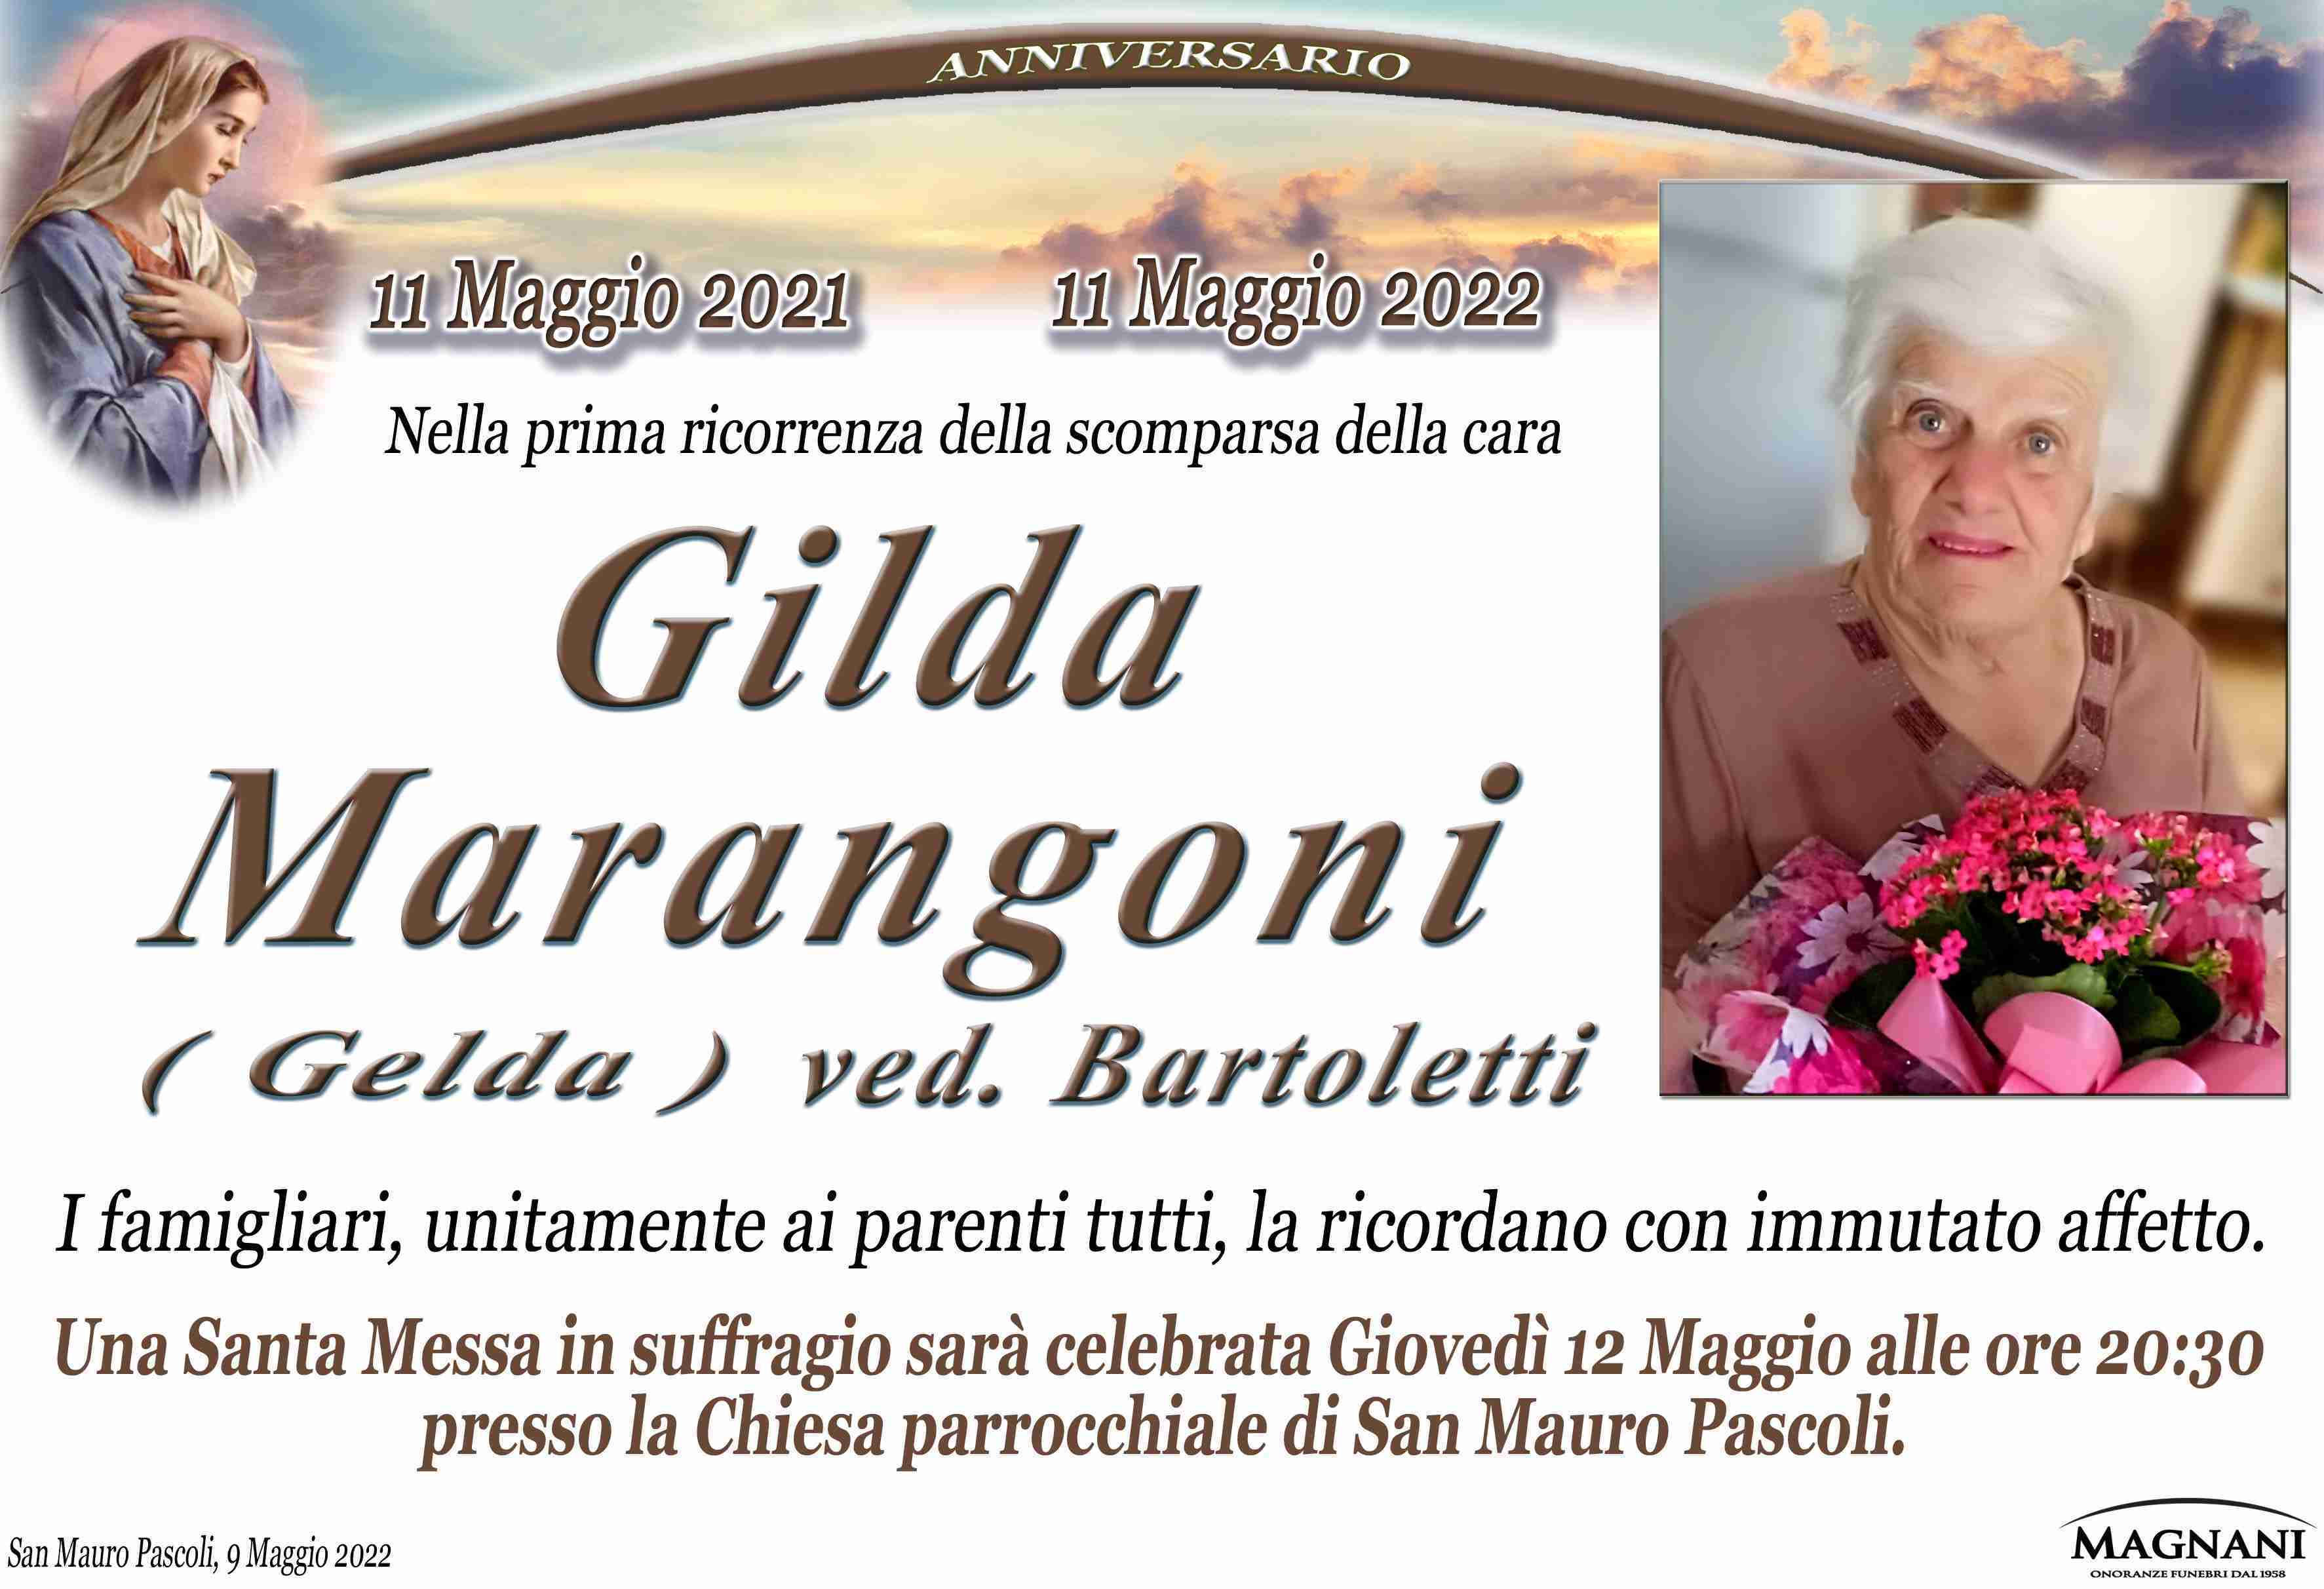 Gilda Marangoni